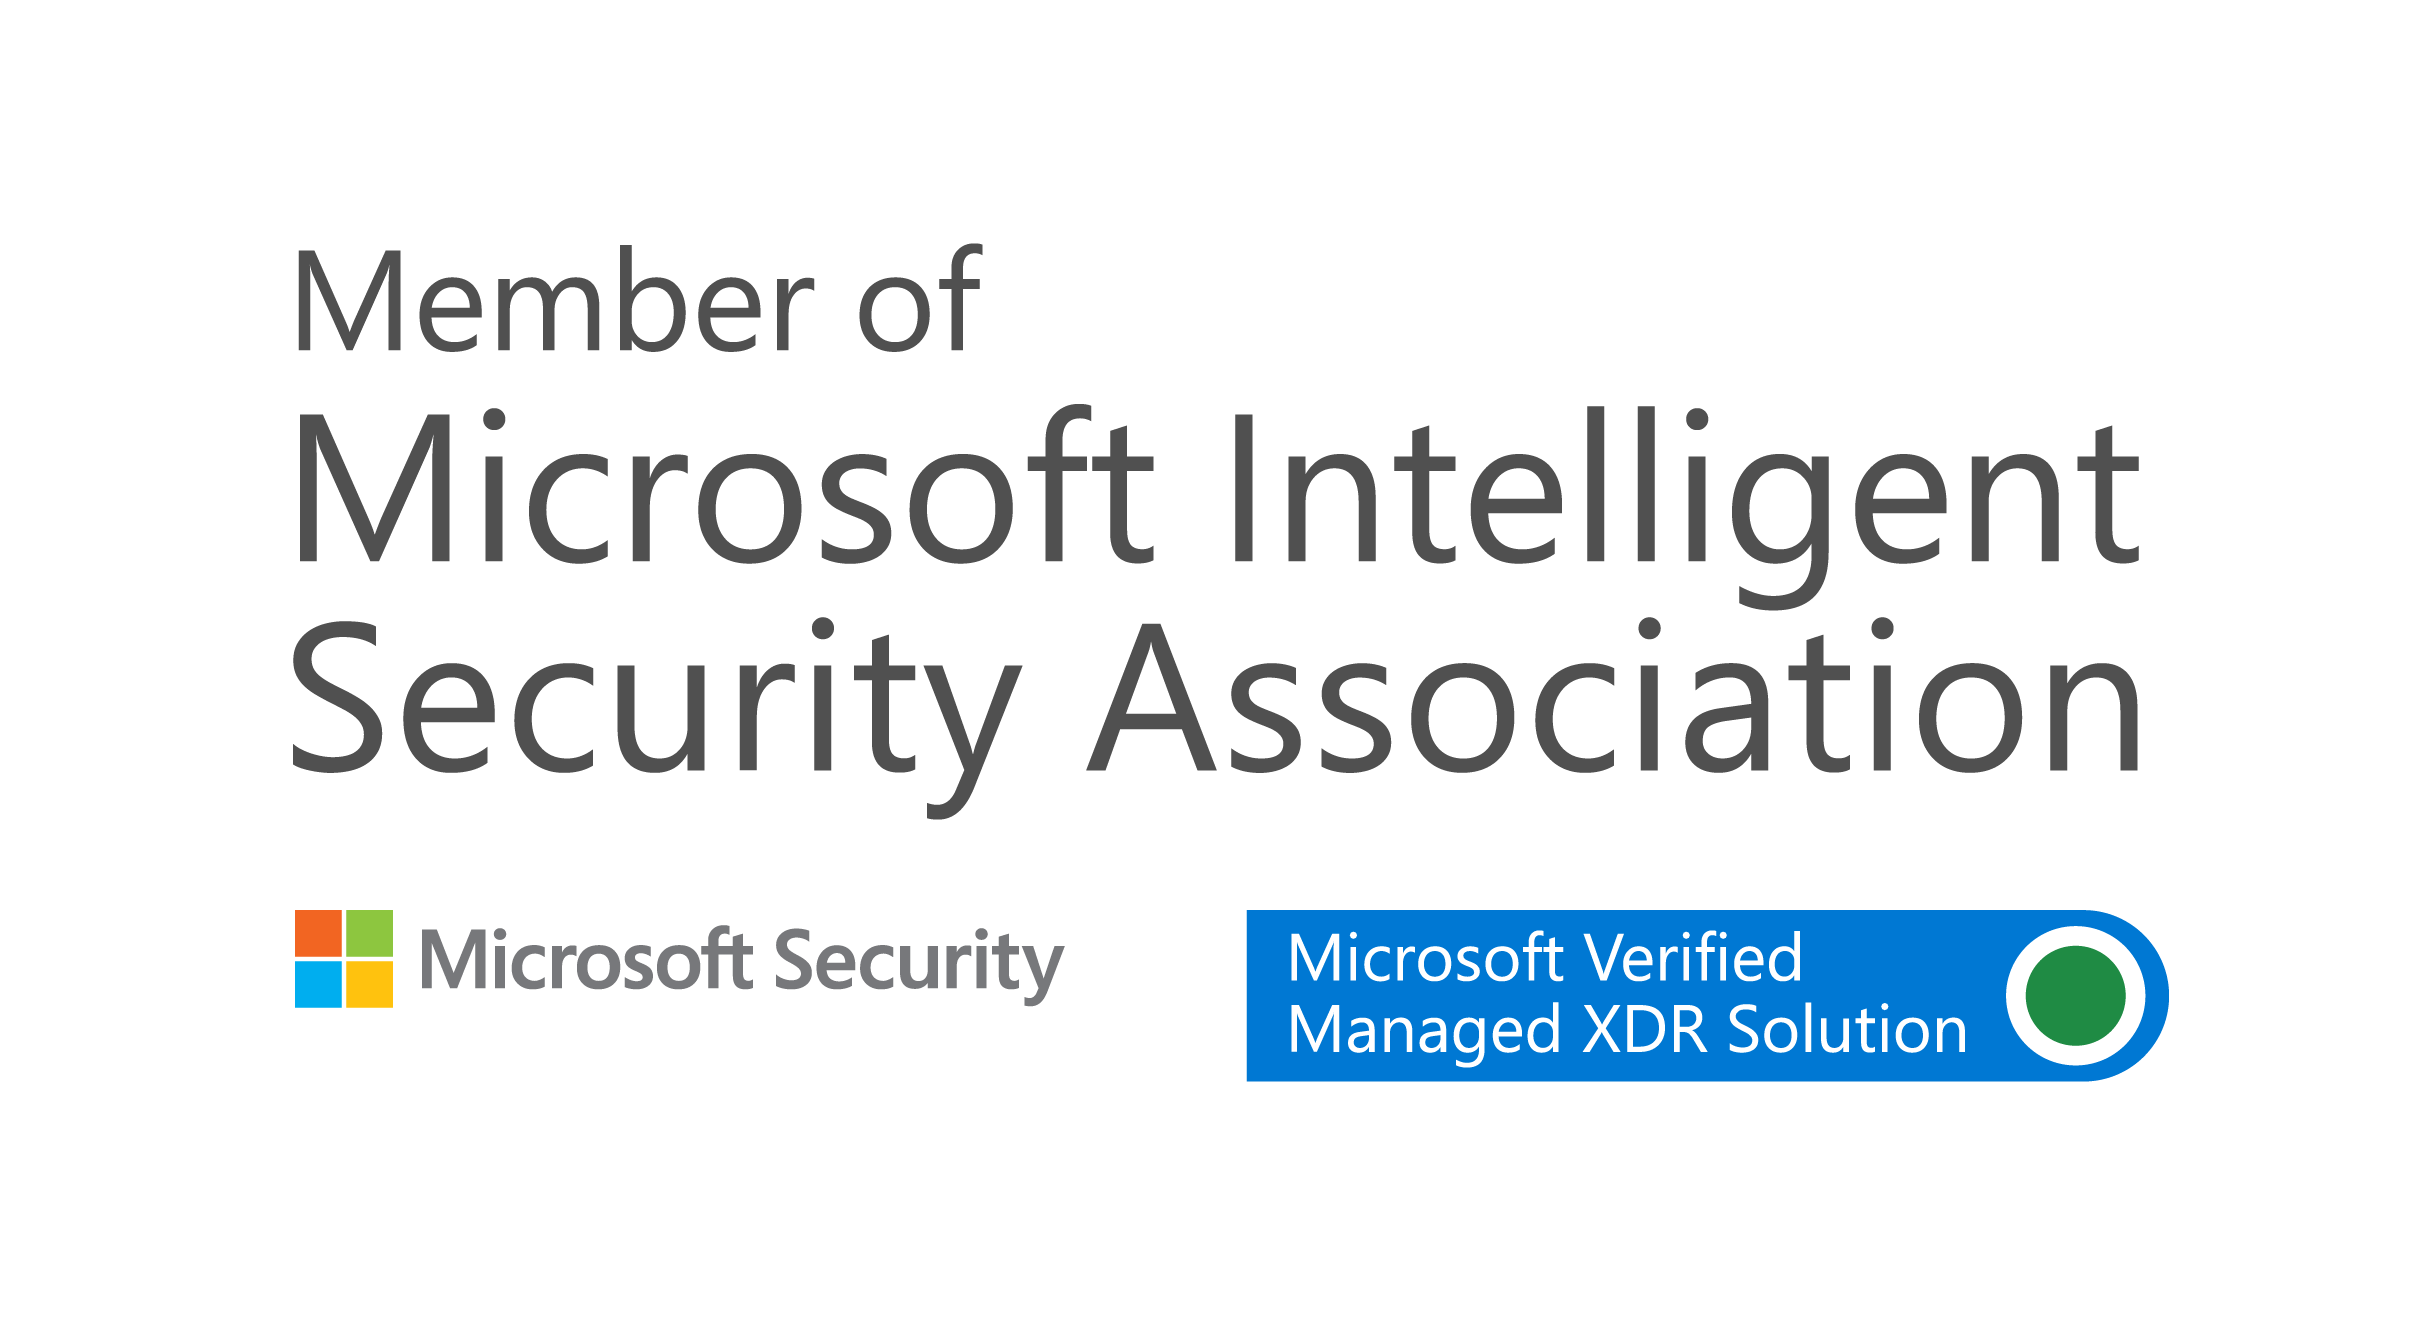 Member of Microsoft Intelligent Security Association MXDR